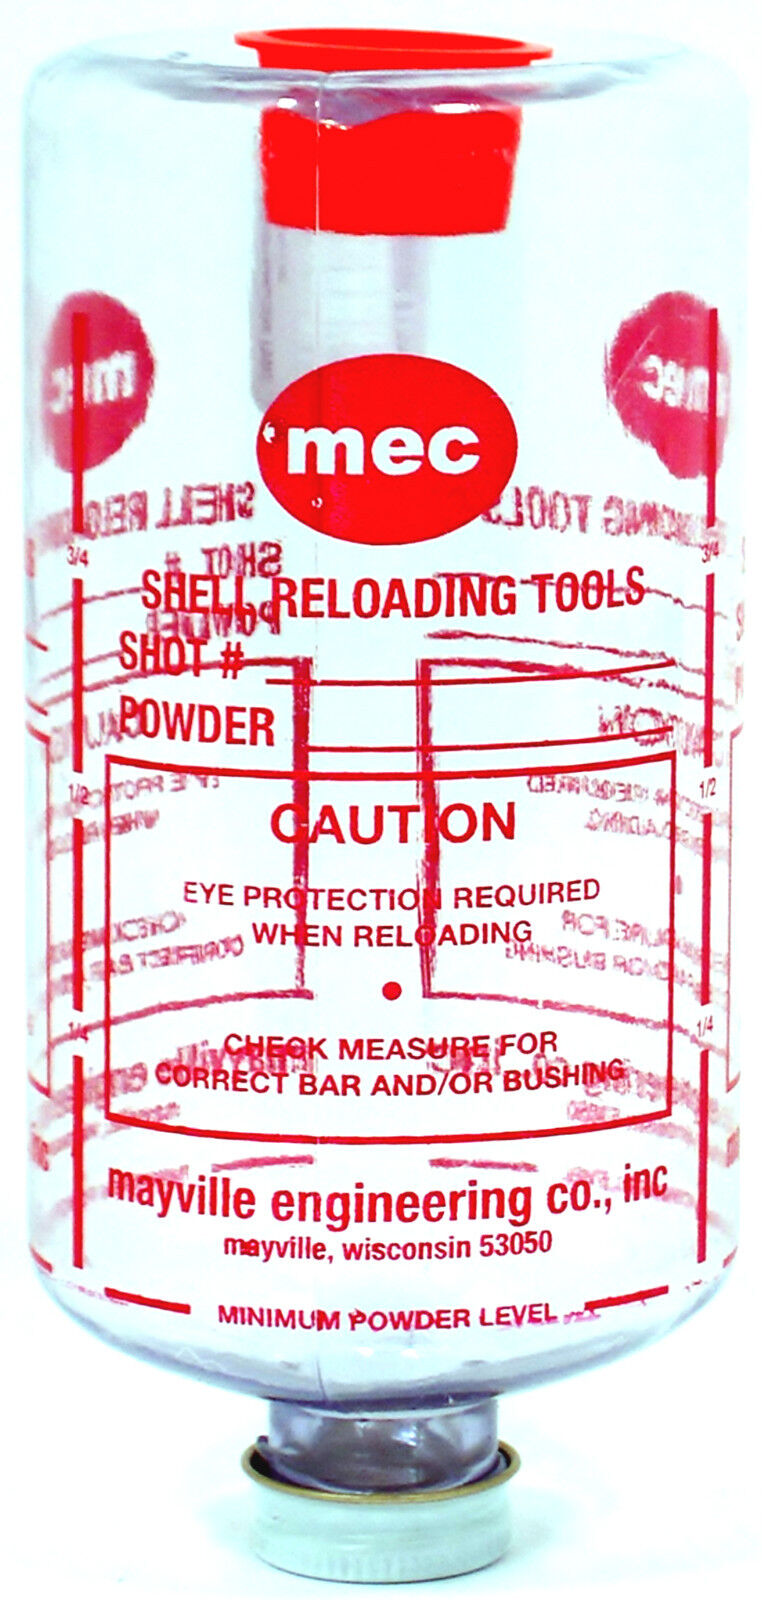 MEC 6 INCH SHOT, POWDER BOTTLE